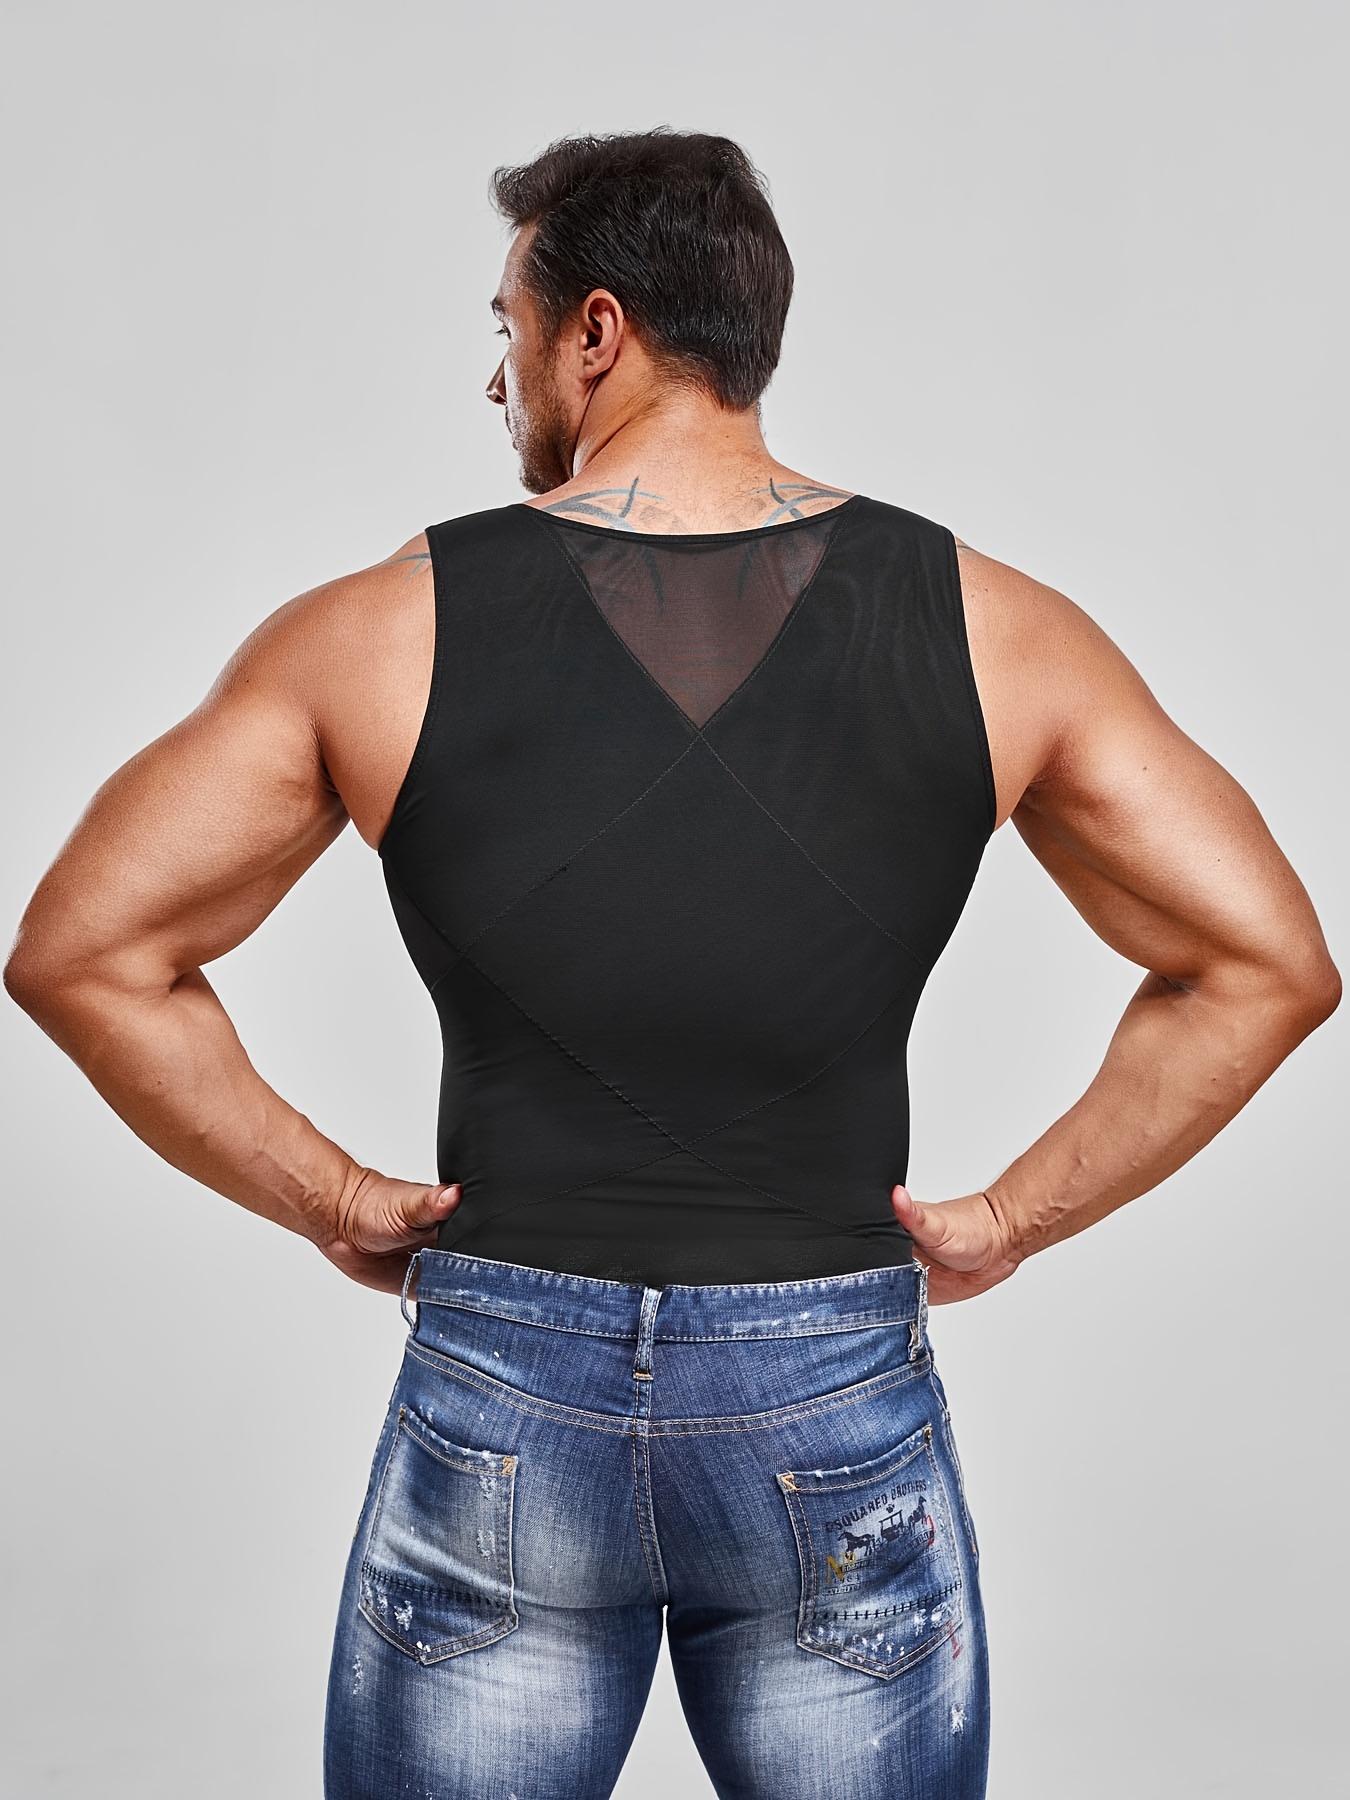 TIRTHFASHION Men Compression Shirt Slimming Body Shaper